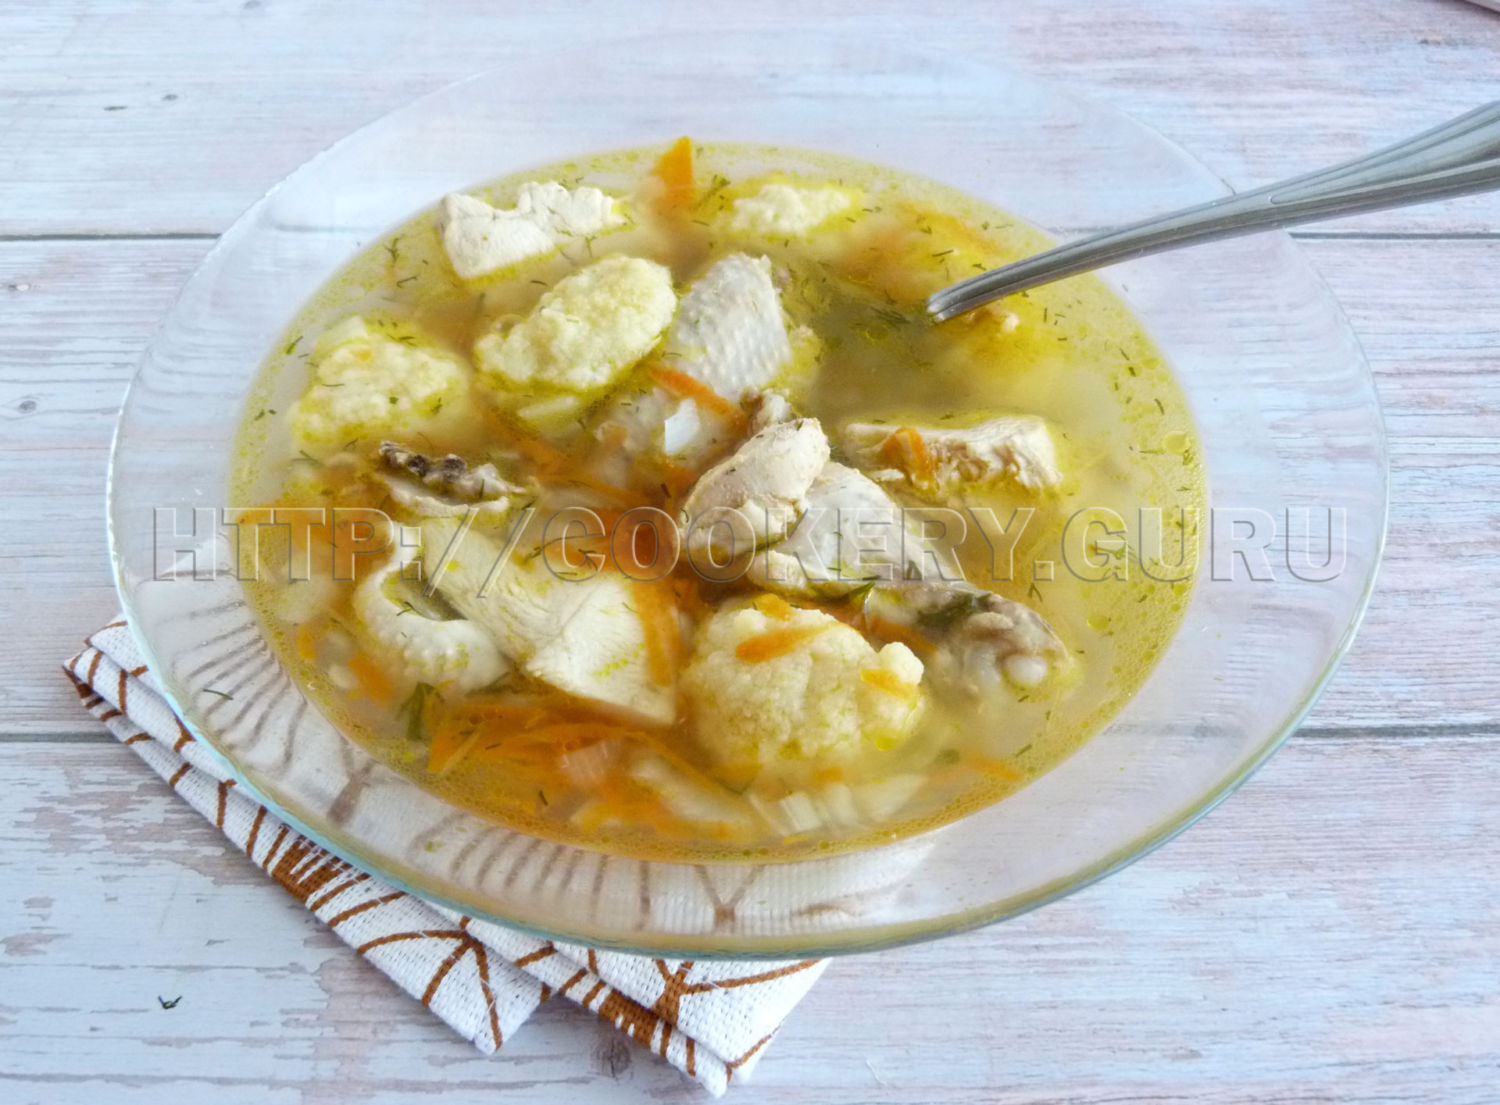 куриный суп, суп курица, суп фото рецепт, вкусный суп, простой суп рецепт, куриный суп с клецками, суп с клецками на курином бульоне, куриный суп с клецками рецепт, куриный суп простой рецепт, куриный суп с клецками пошаговый, куриный суп с клецками пошаговый рецепт, куриный суп с клецками фото, рецепт куриный суп с клецками фото, куриный суп с клецками пошагово, куриный суп с клецками калорийность, вкусный куриный суп с клецками, как приготовить куриный суп с клецками, куриный суп с манными клецками, куриный суп с клецками из манки